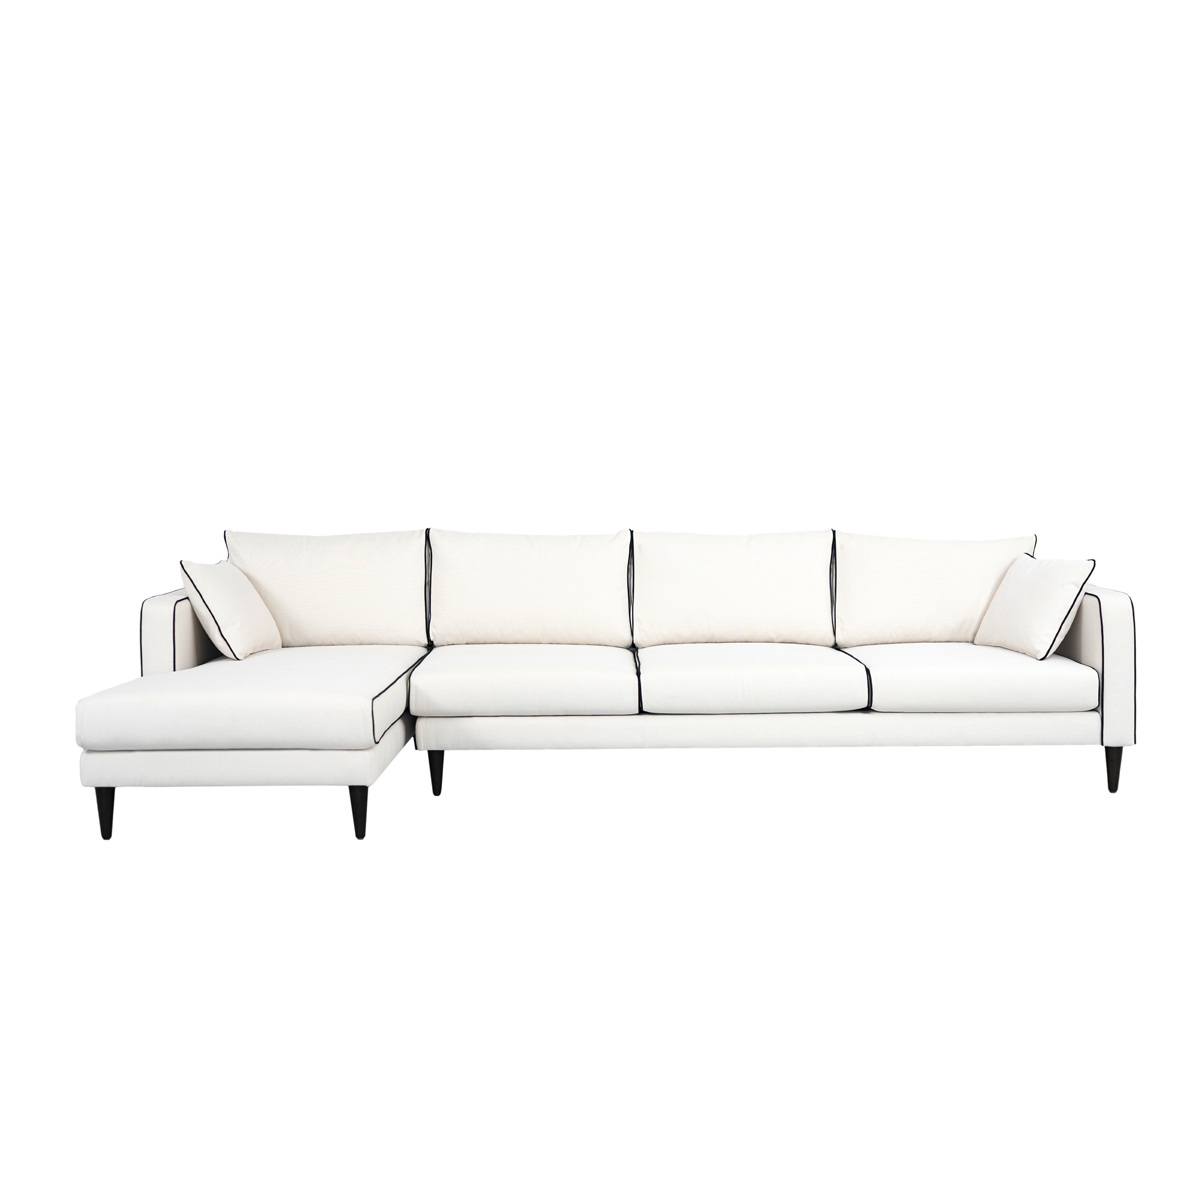 Noa corner sofa - Left angle, L300 x P150 x H75 cm - Cotton - image 1